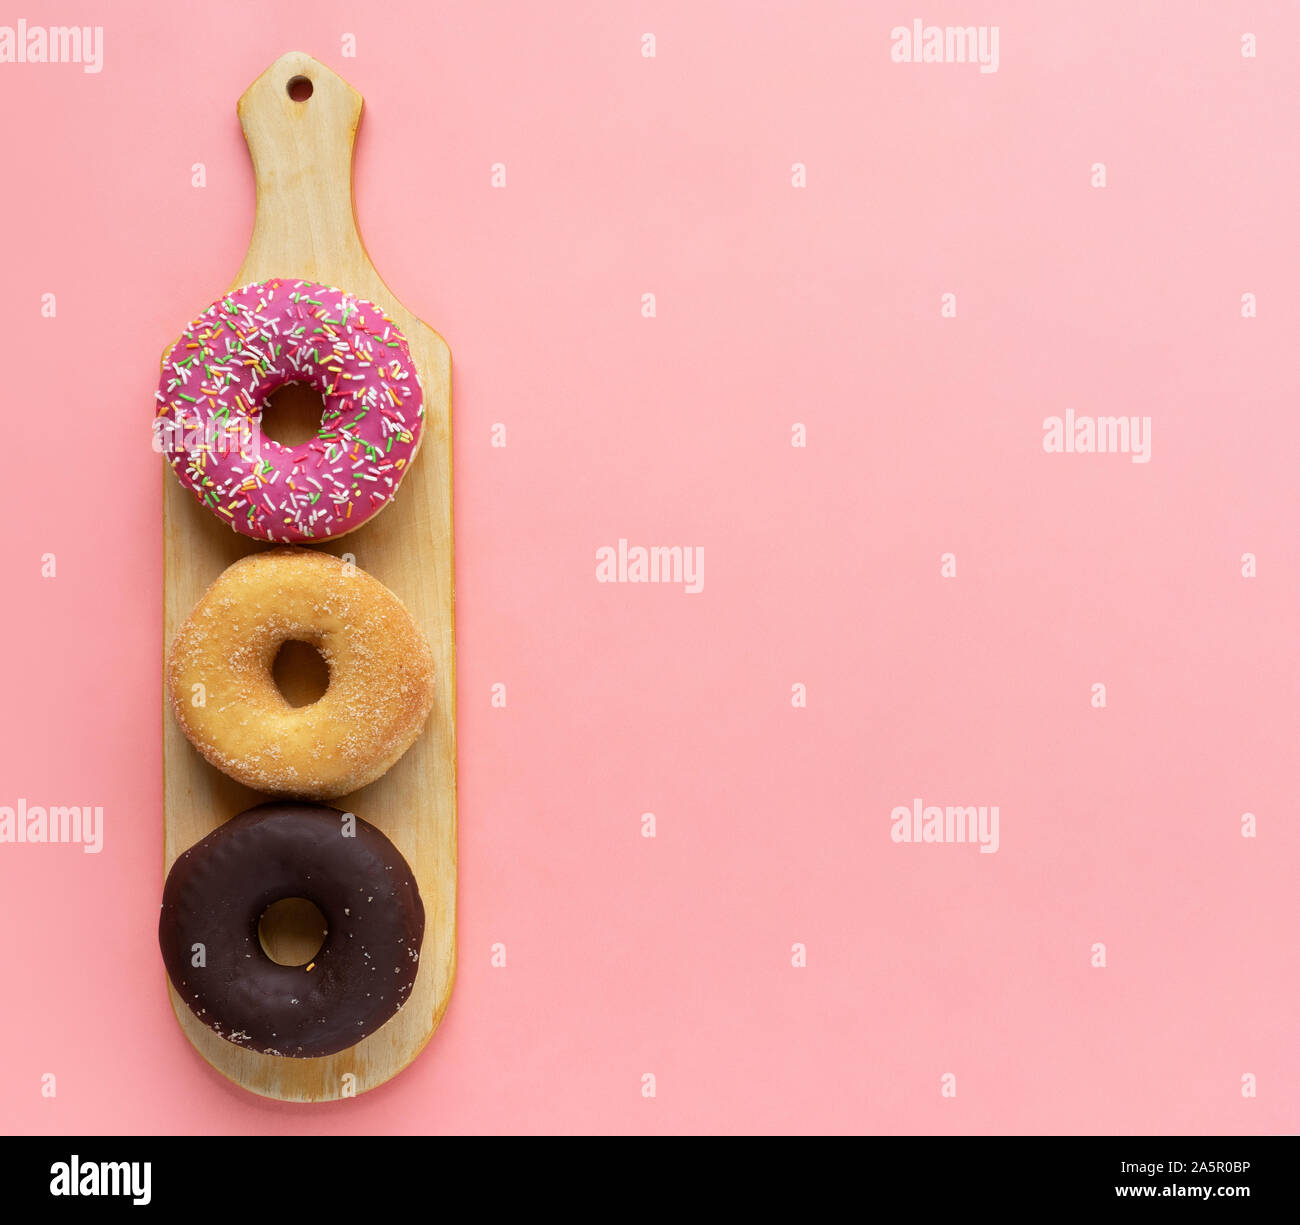 Tres diferentes donuts, chocolate donut, Rosa guinda y sin guinda sobre una tabla de cortar de madera sobre un fondo de color rosa Foto de stock